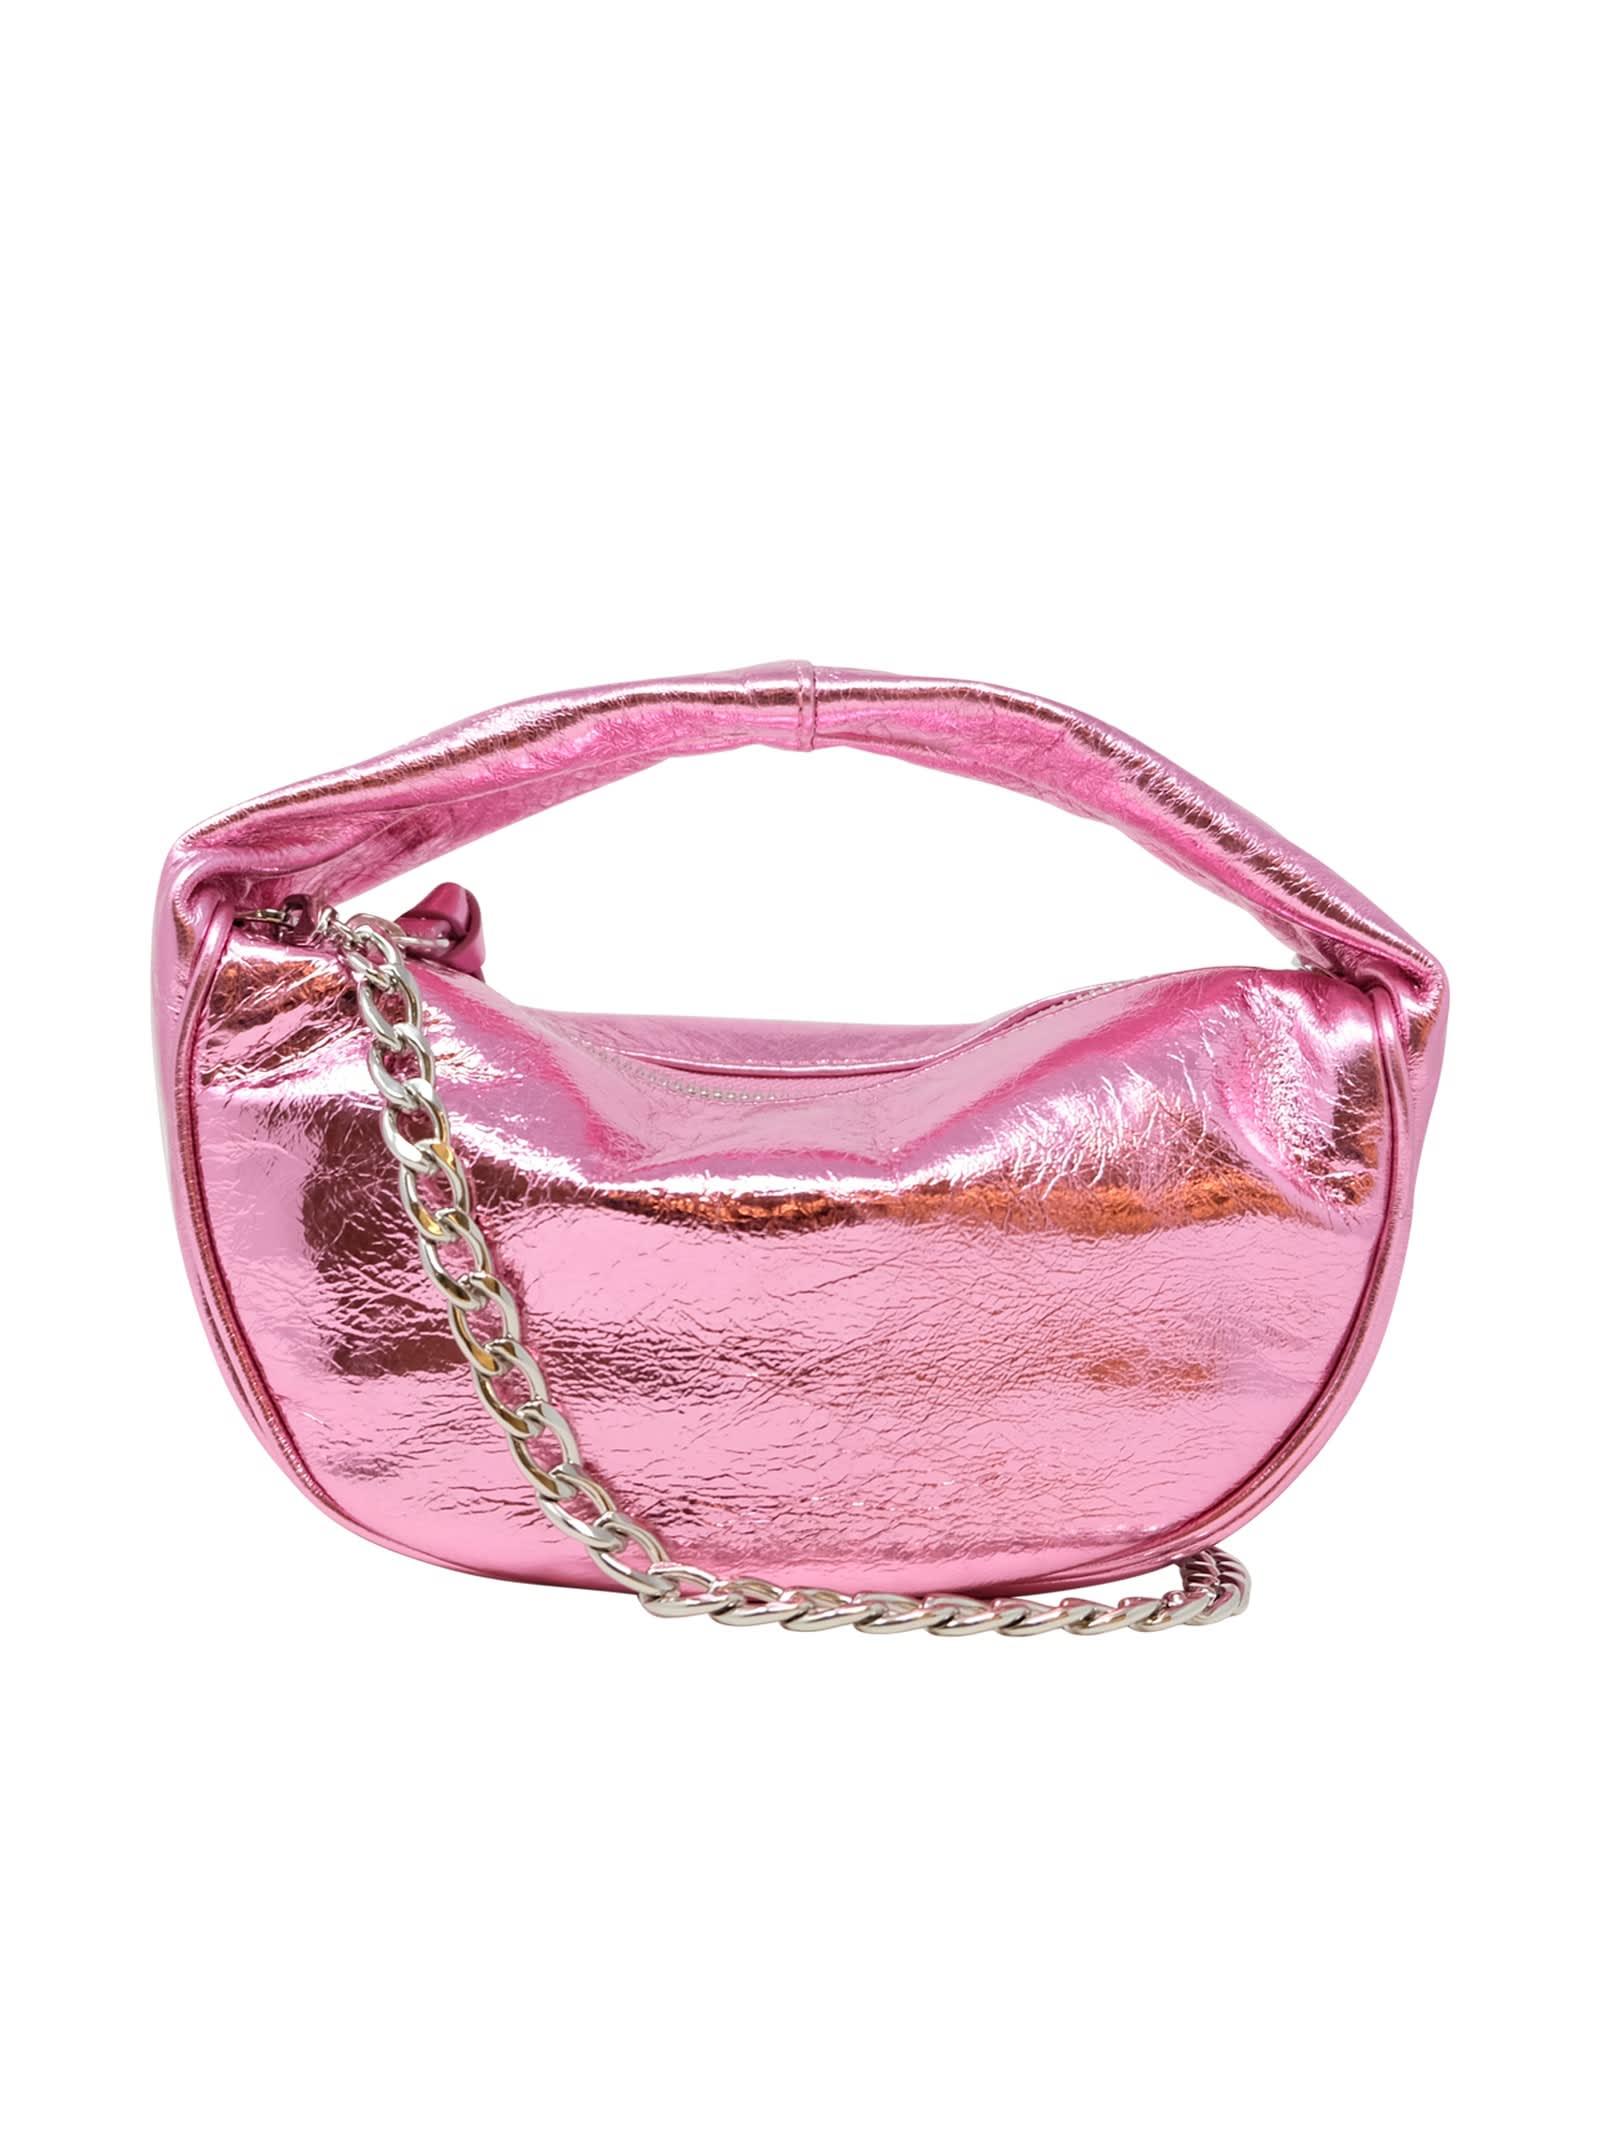 BY FAR Baby Cush Pink Metallic Leather Handbag | Lyst